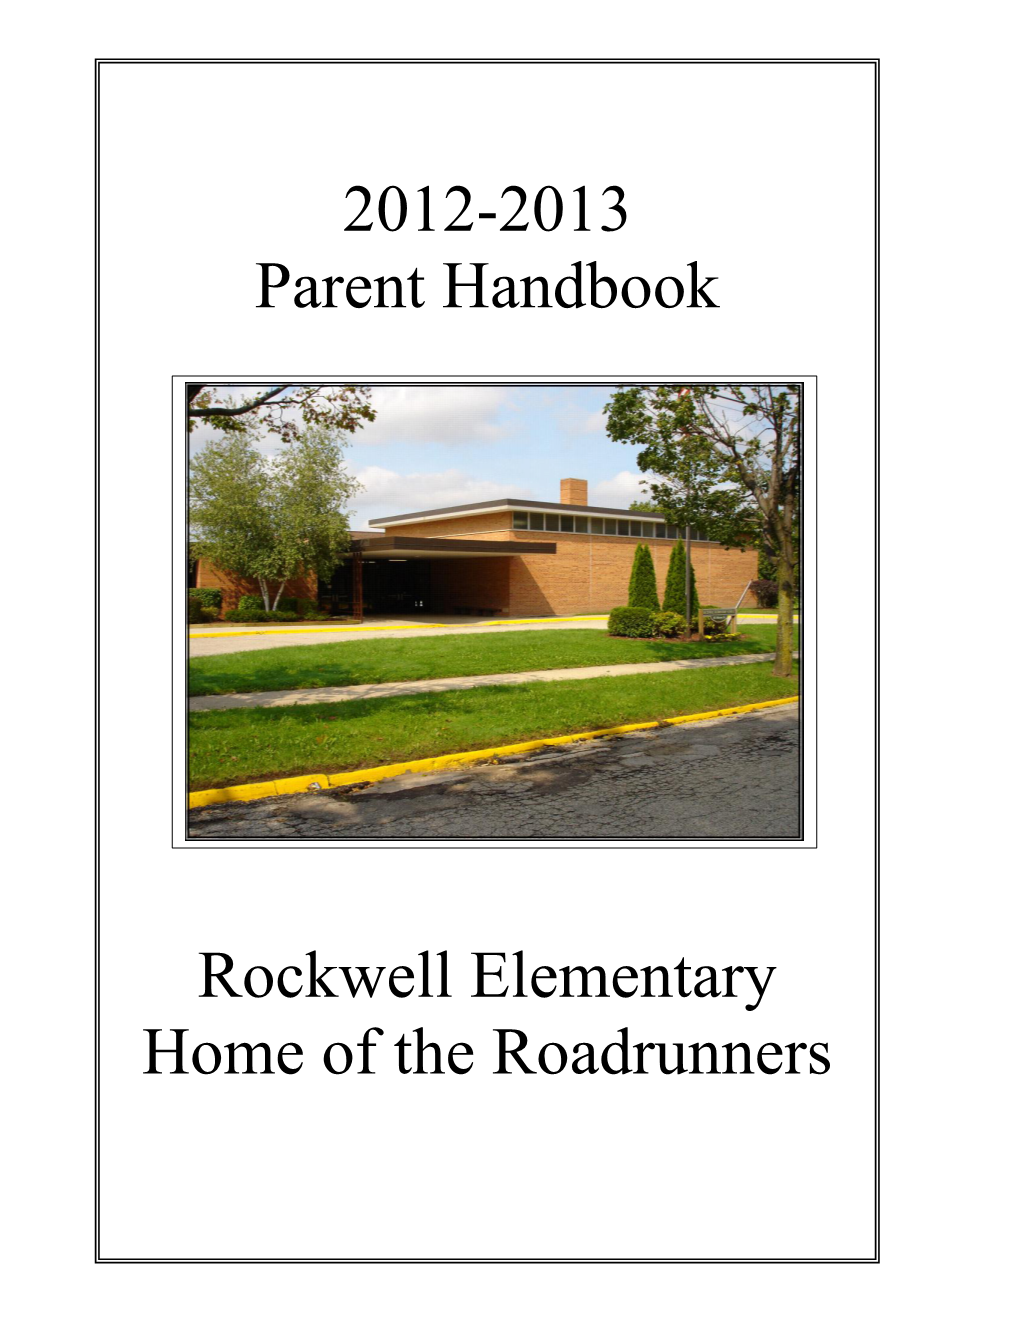 2012-2013 Parent Handbook Rockwell Elementary Home of the Roadrunners